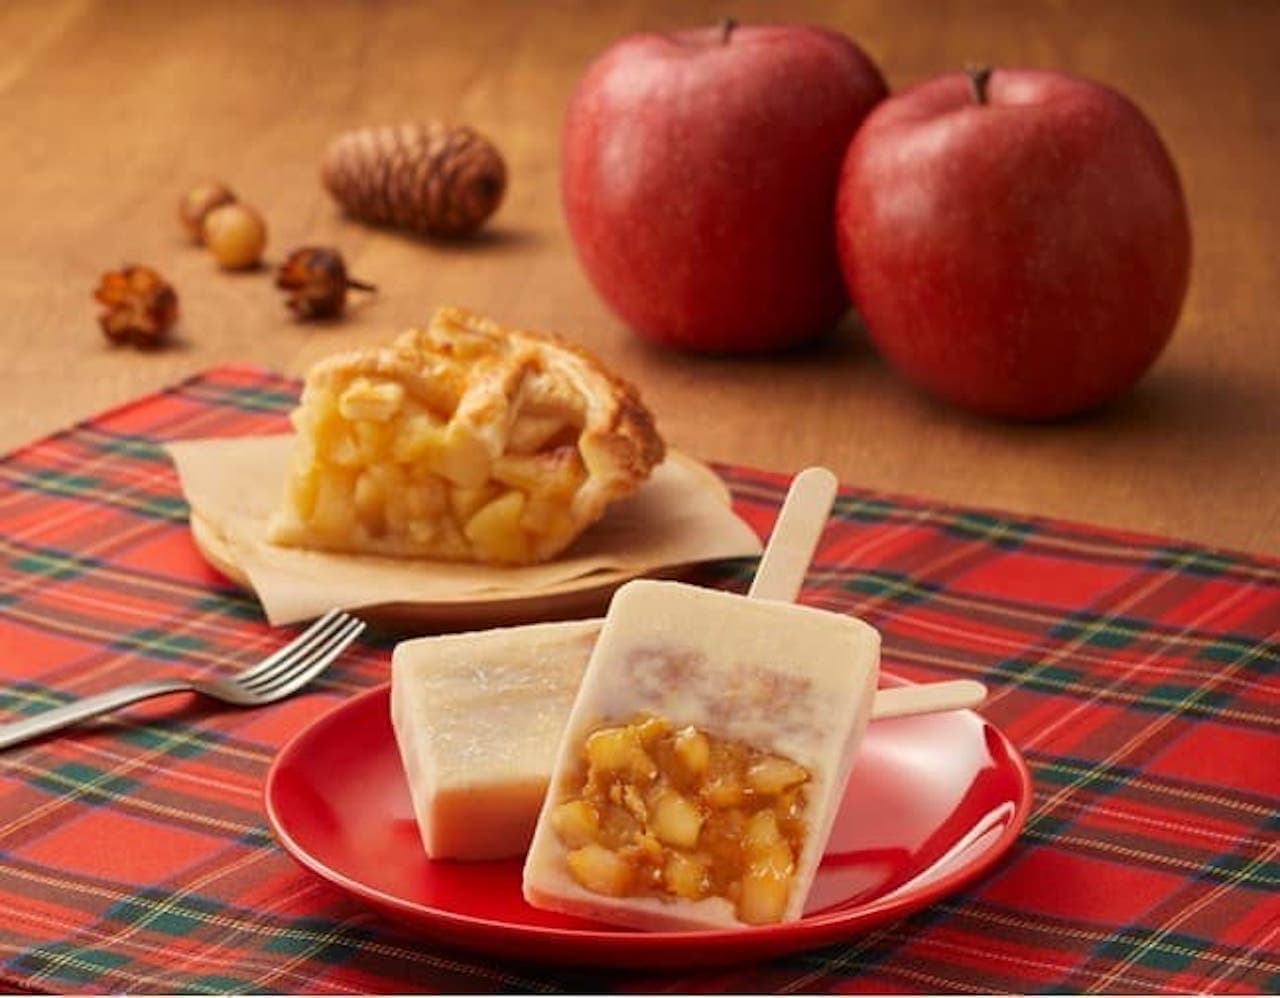 New product "Gororon pulp apple pie bar"